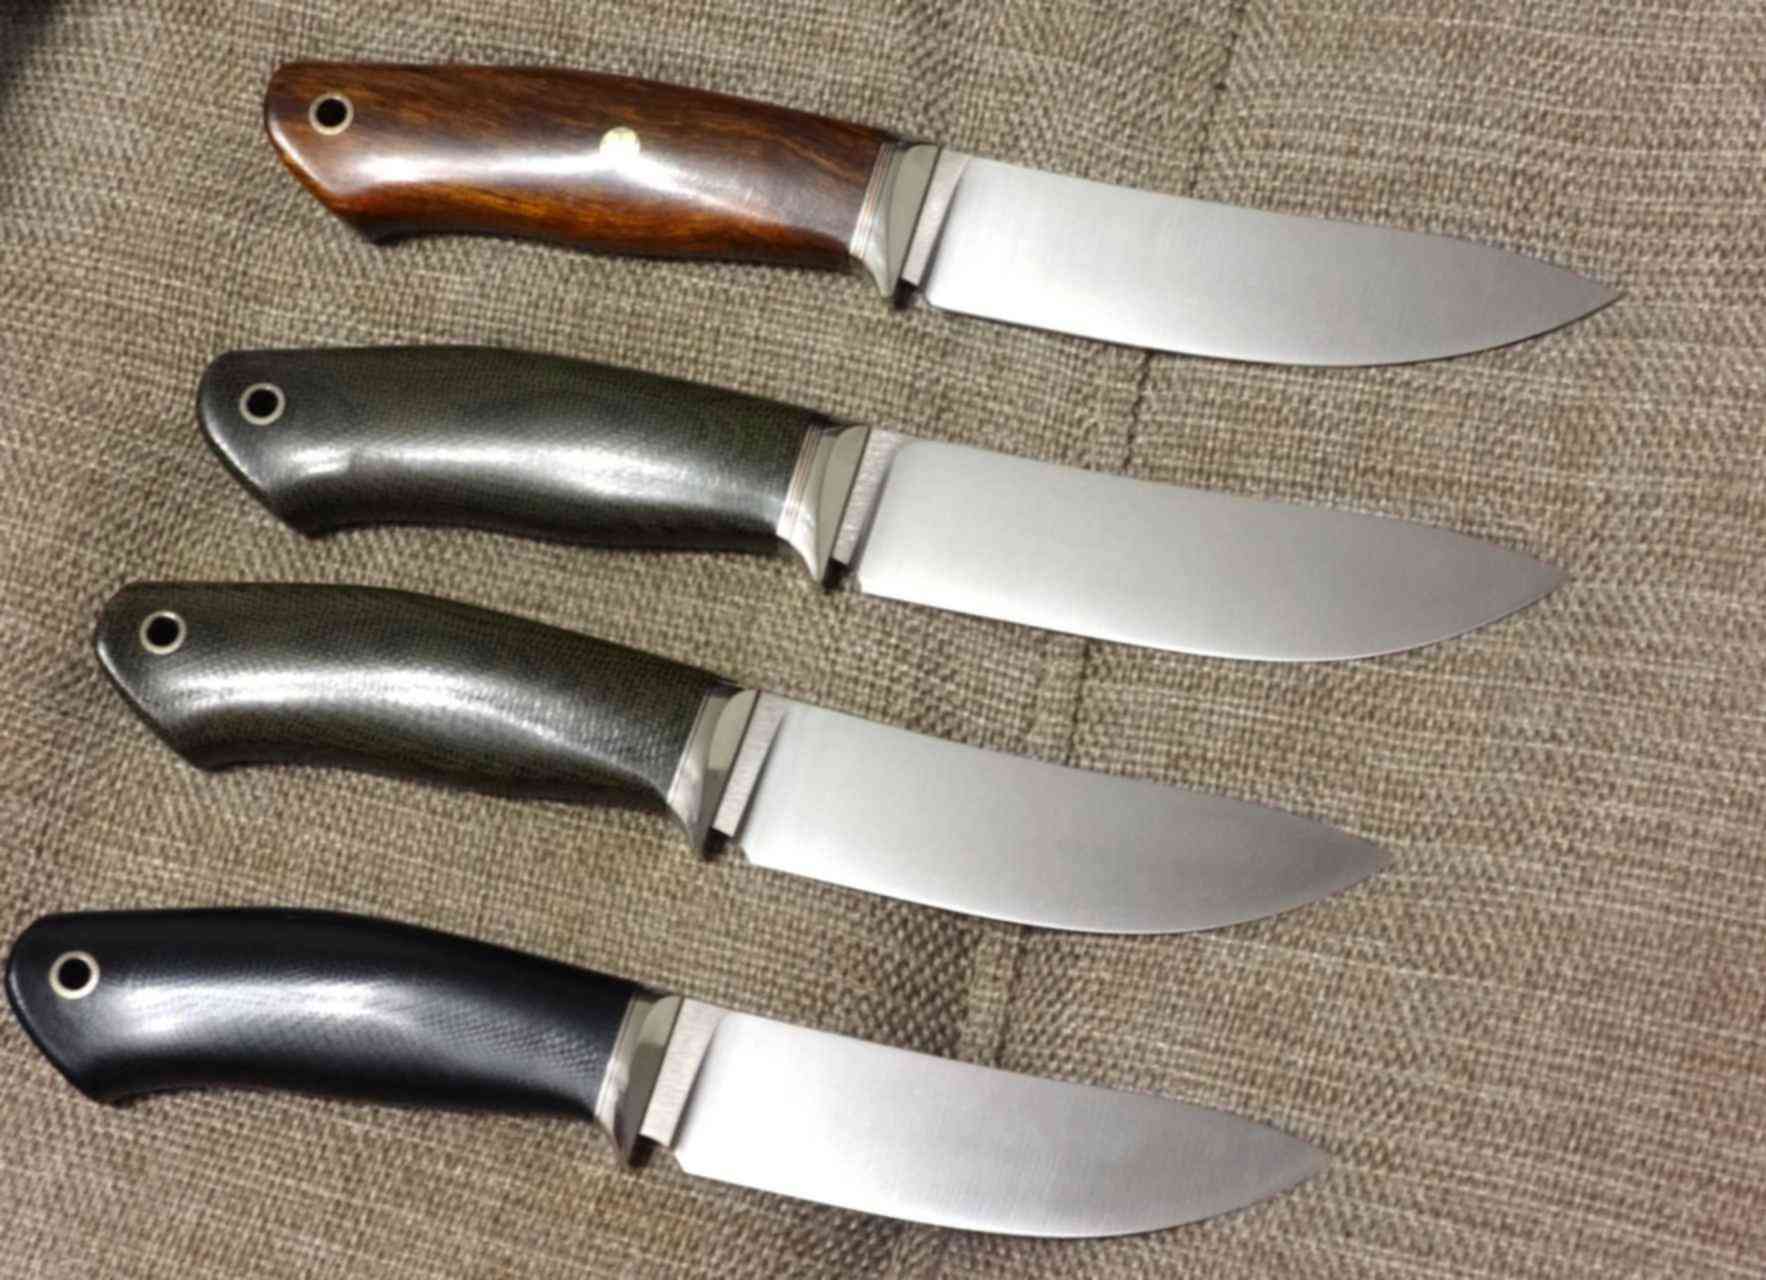 Четверо ножей. Рукоятка ножа g10 Энцо. Ножи СРМ 121 Rex. G10 рукоять ножа. Микарта g10.